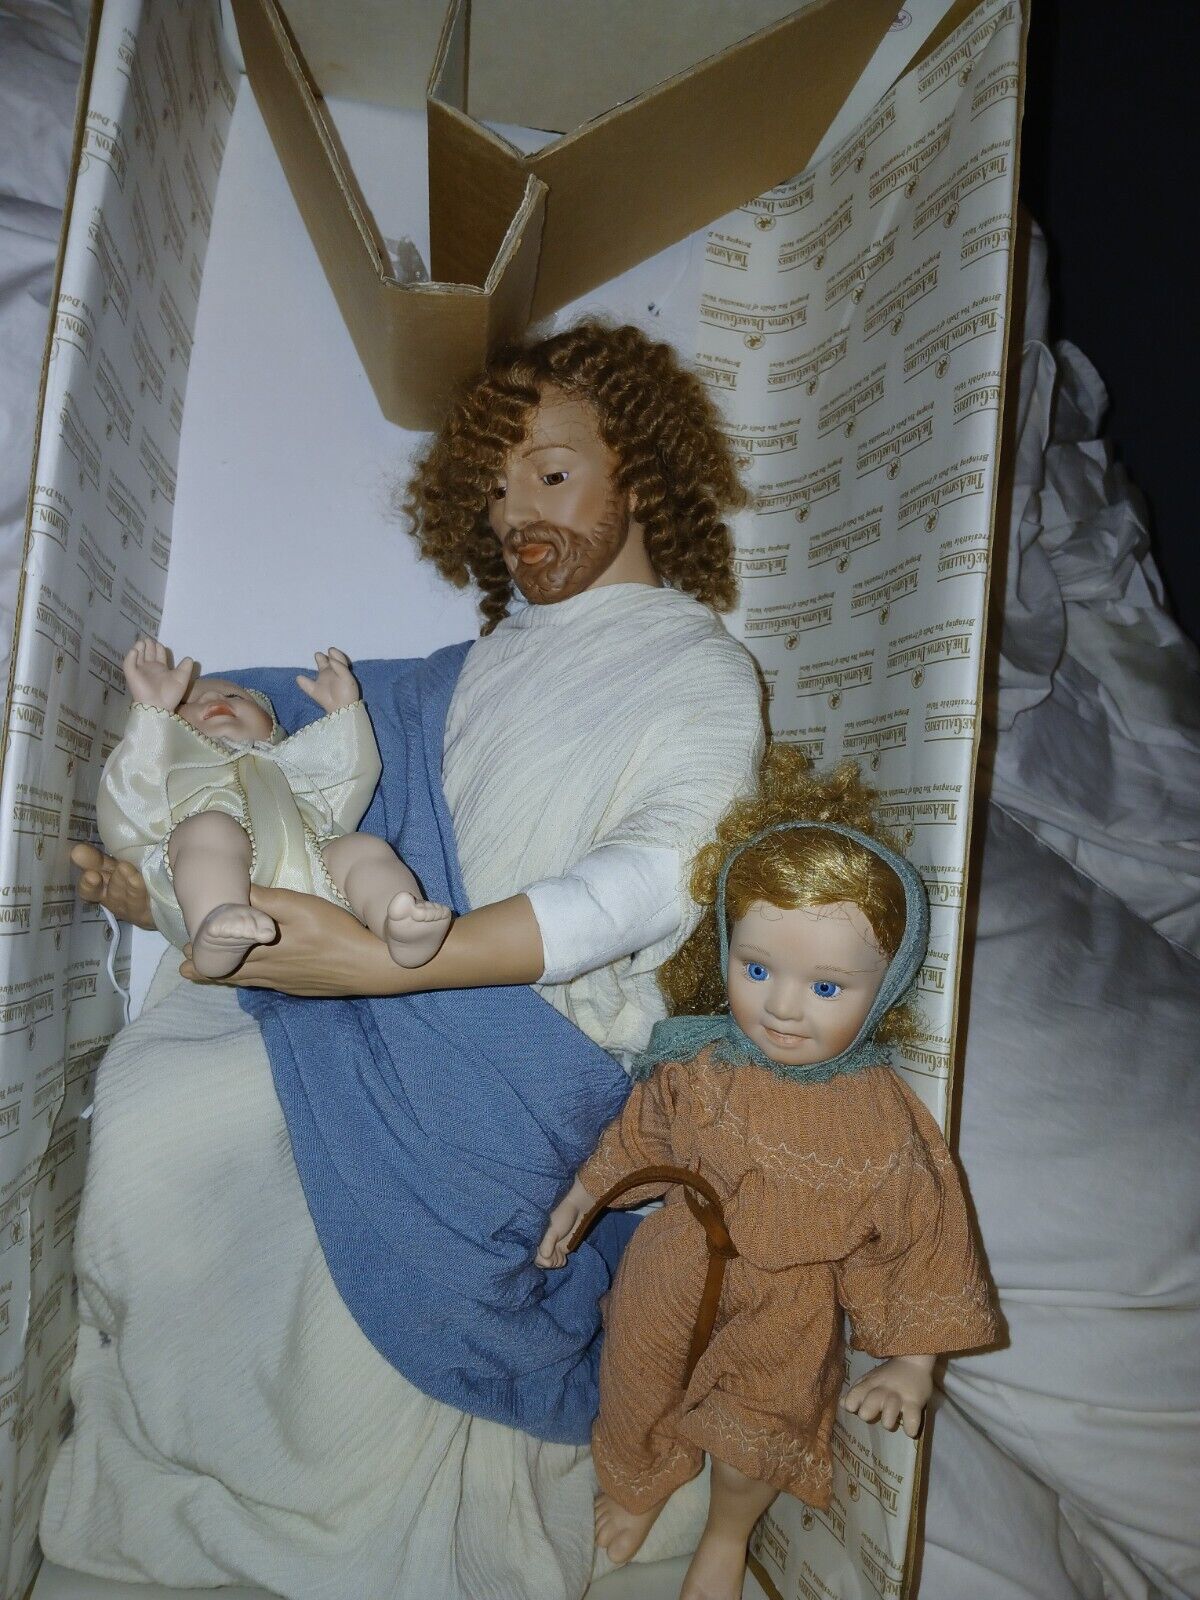 Let The Little Children Come To Me - Porcelain Doll Cert. #TA603OA